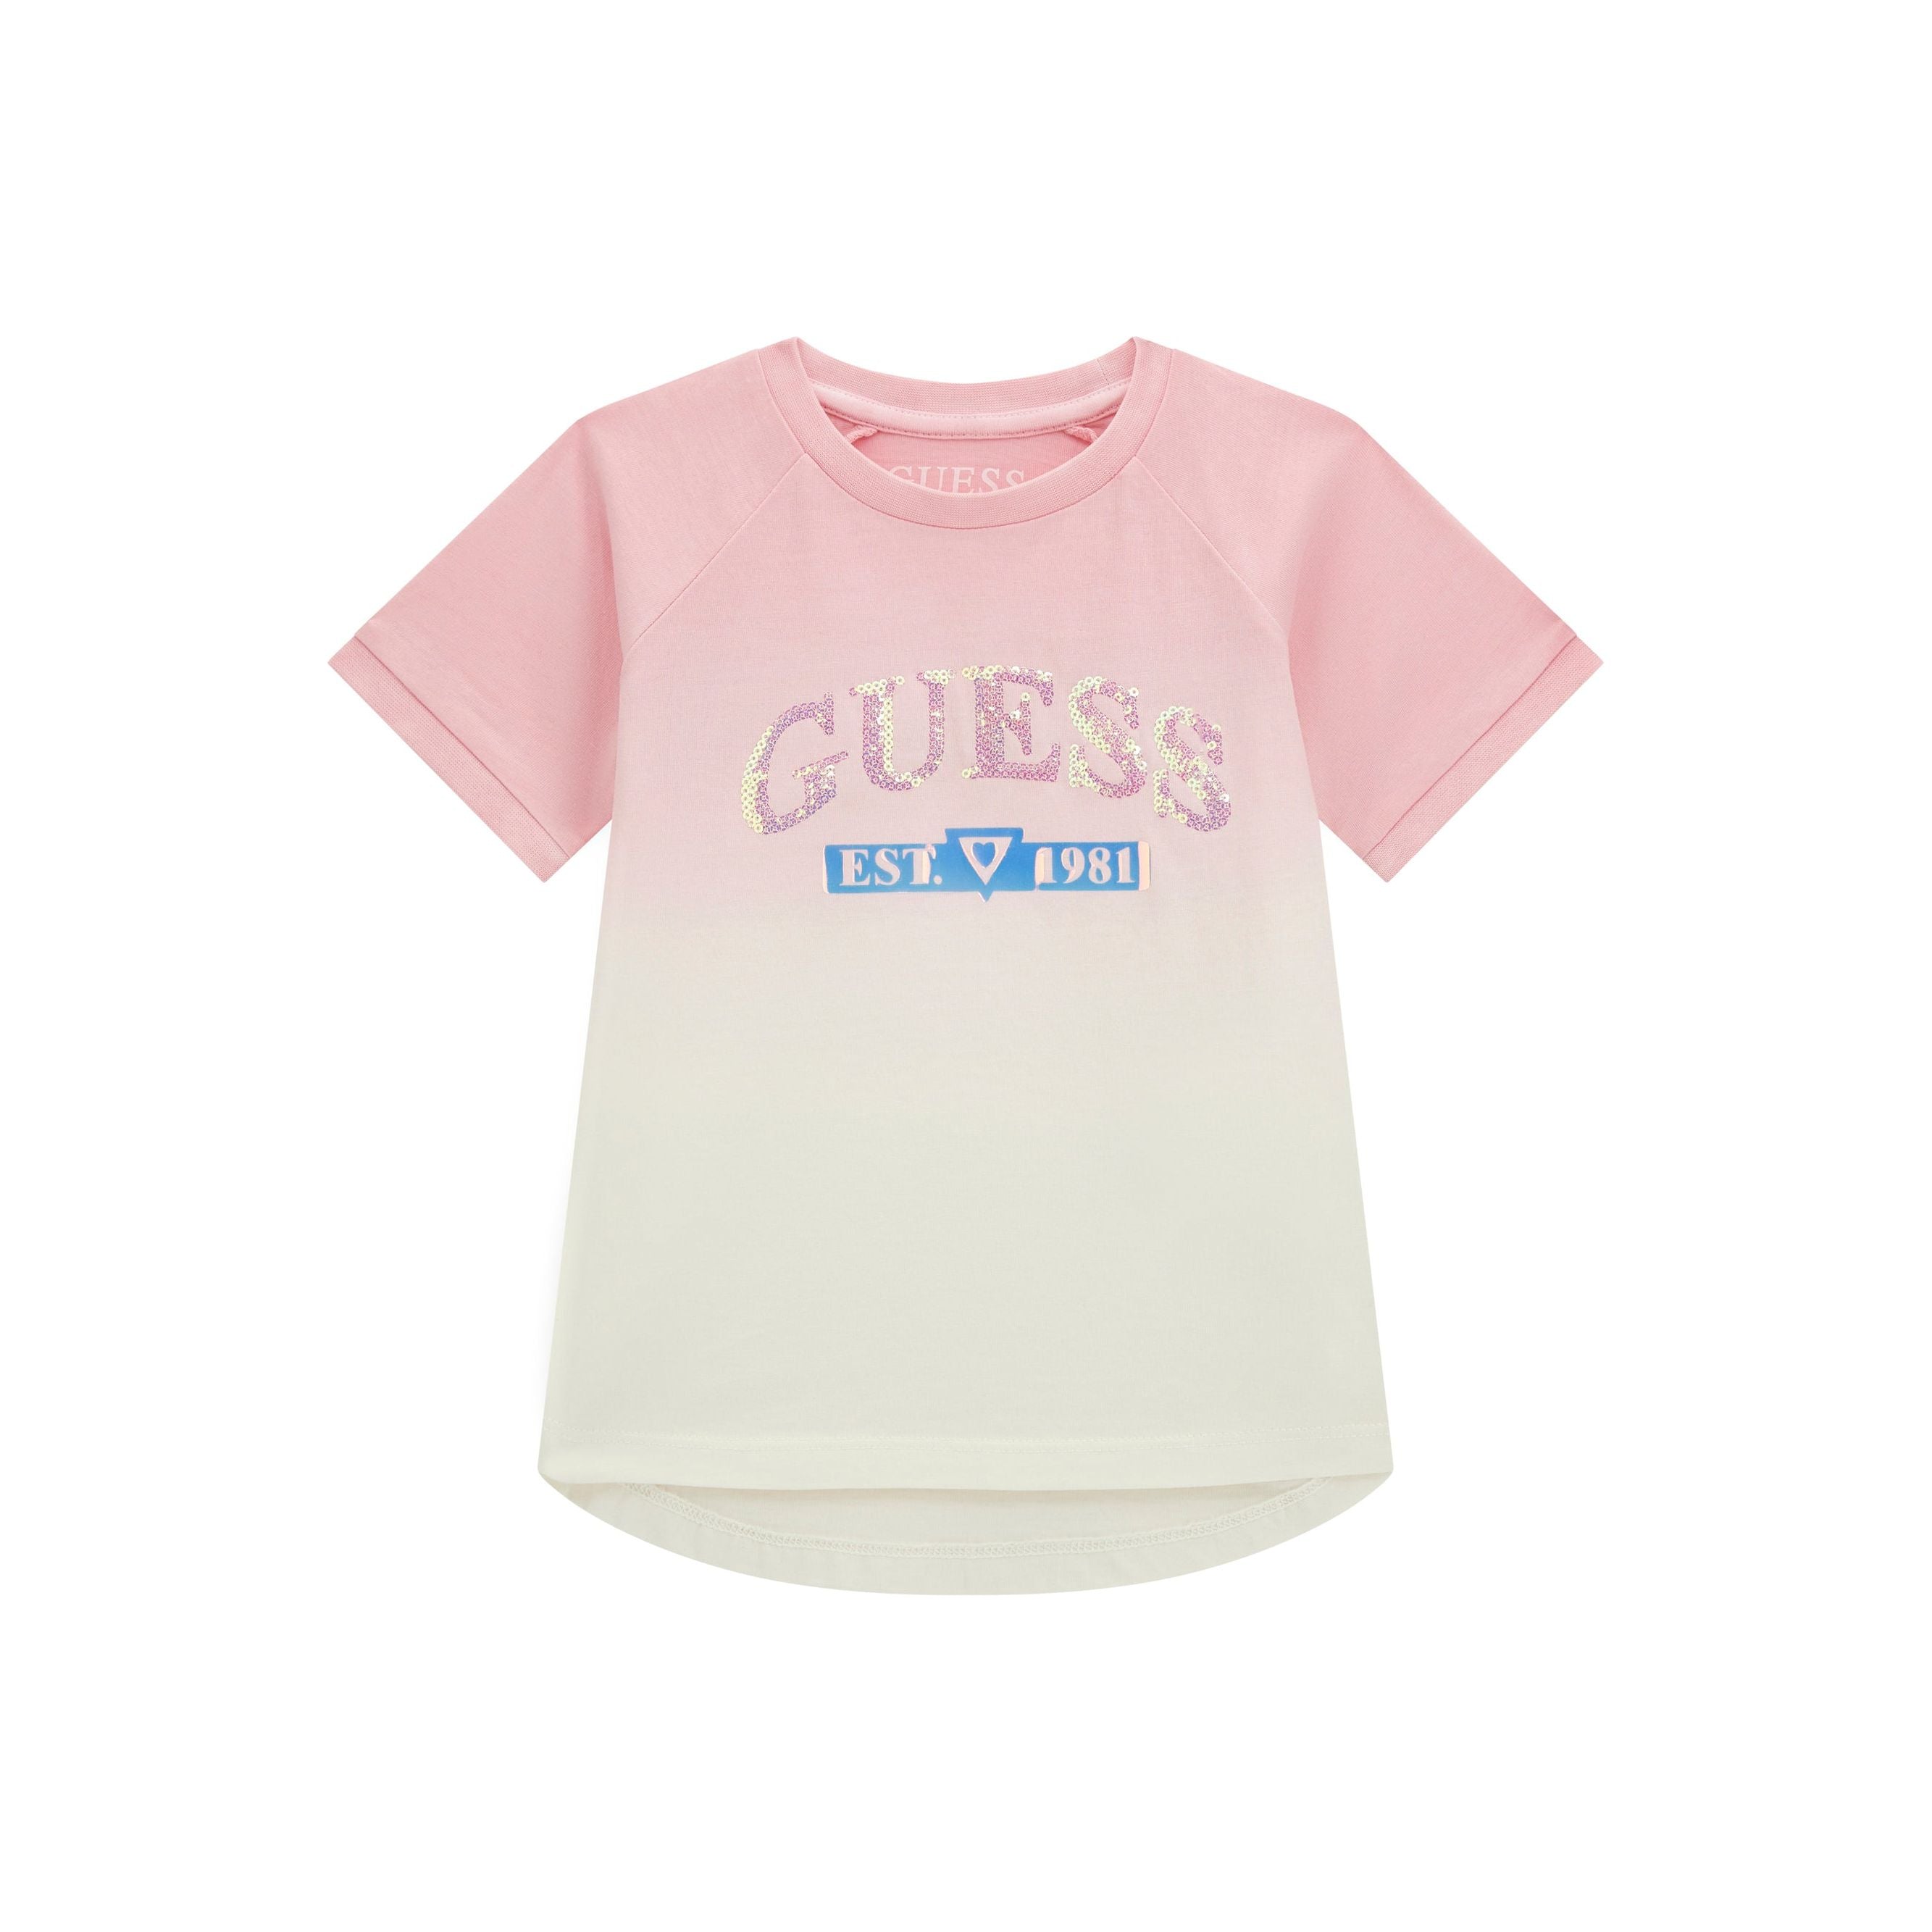 Guess - Toddler Girls Tie Dye Tee in Pink